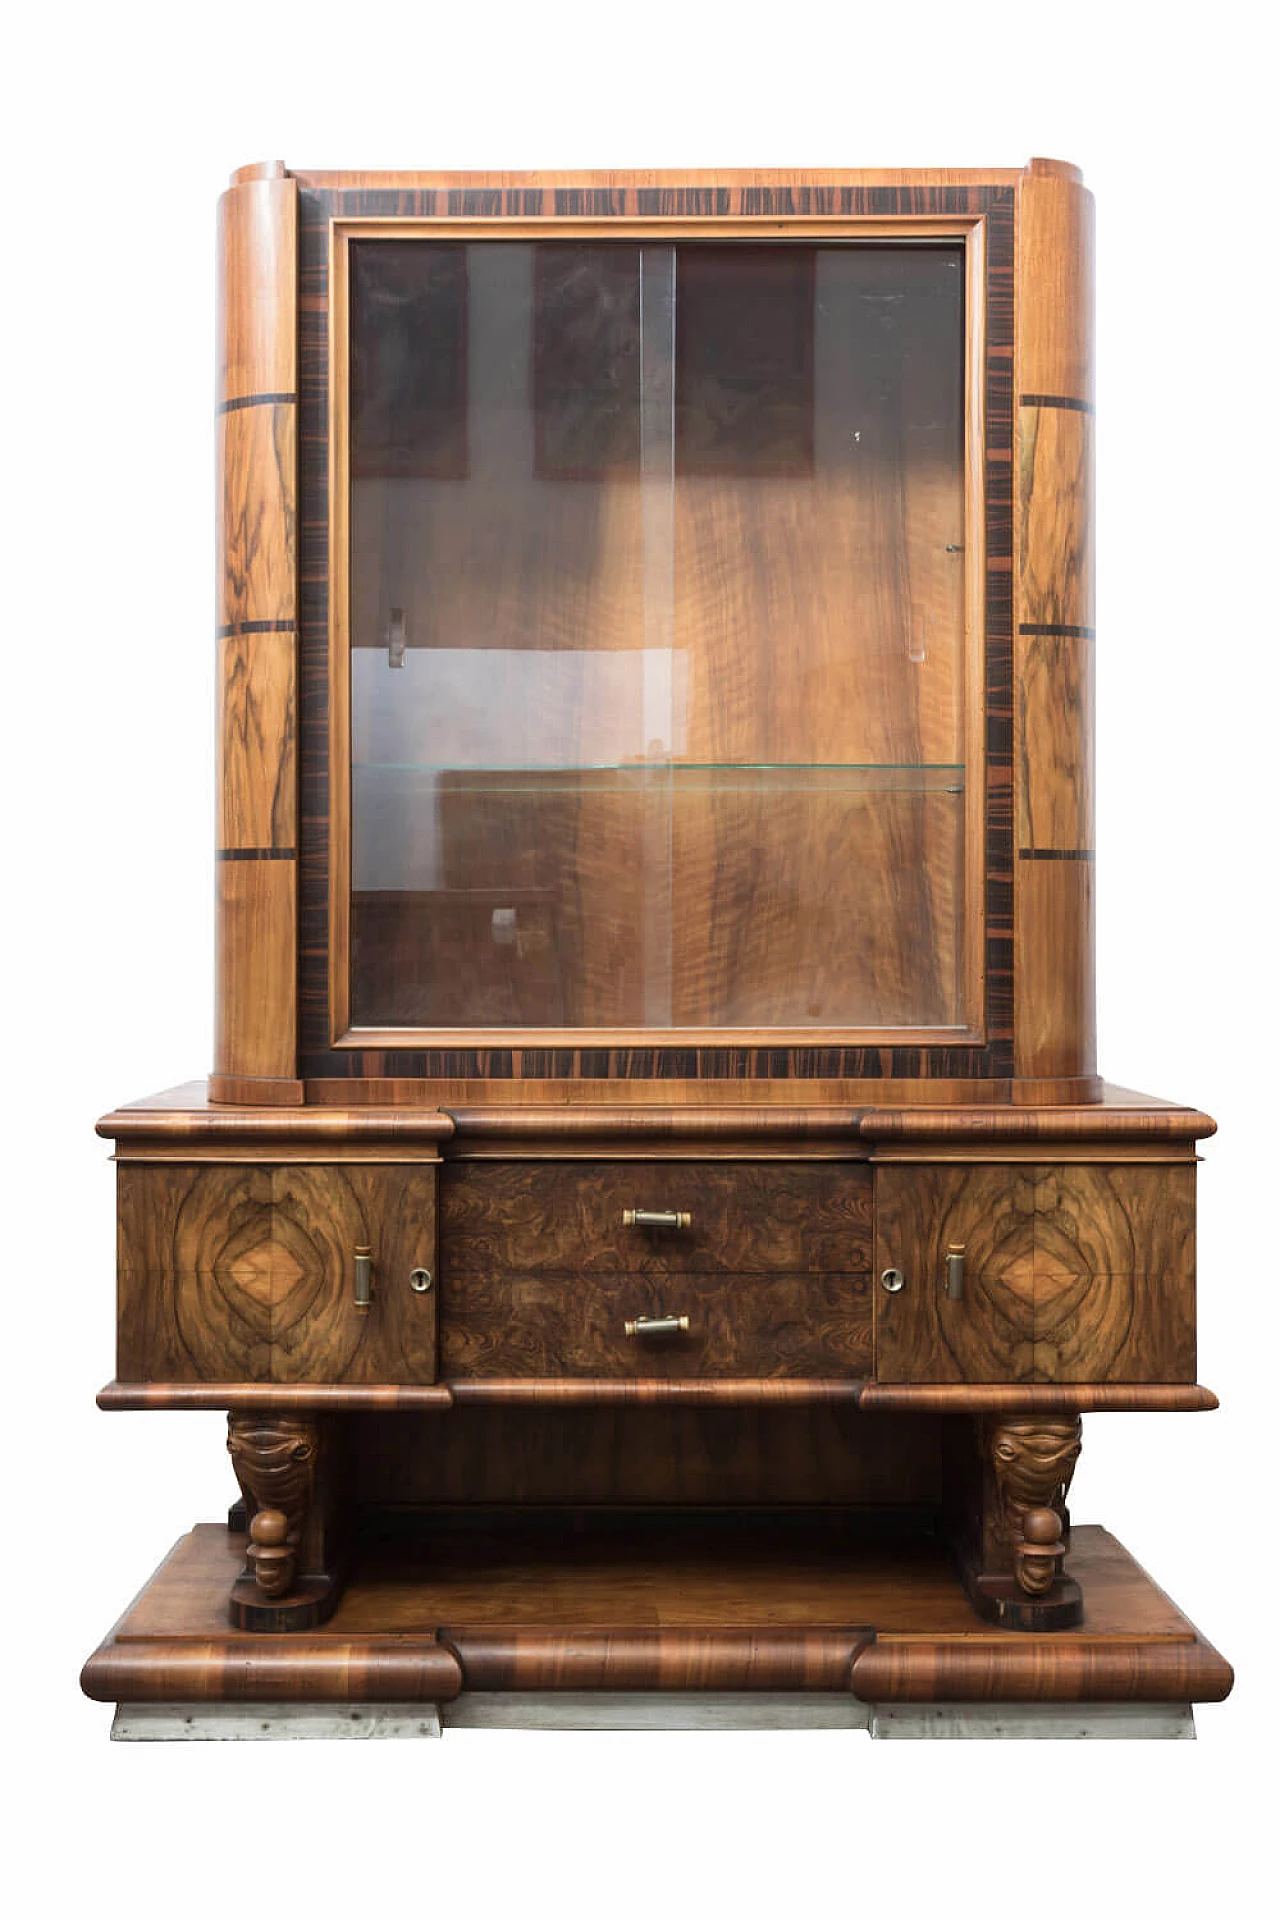 Art deco display case in rosewood, 1930s 1080178